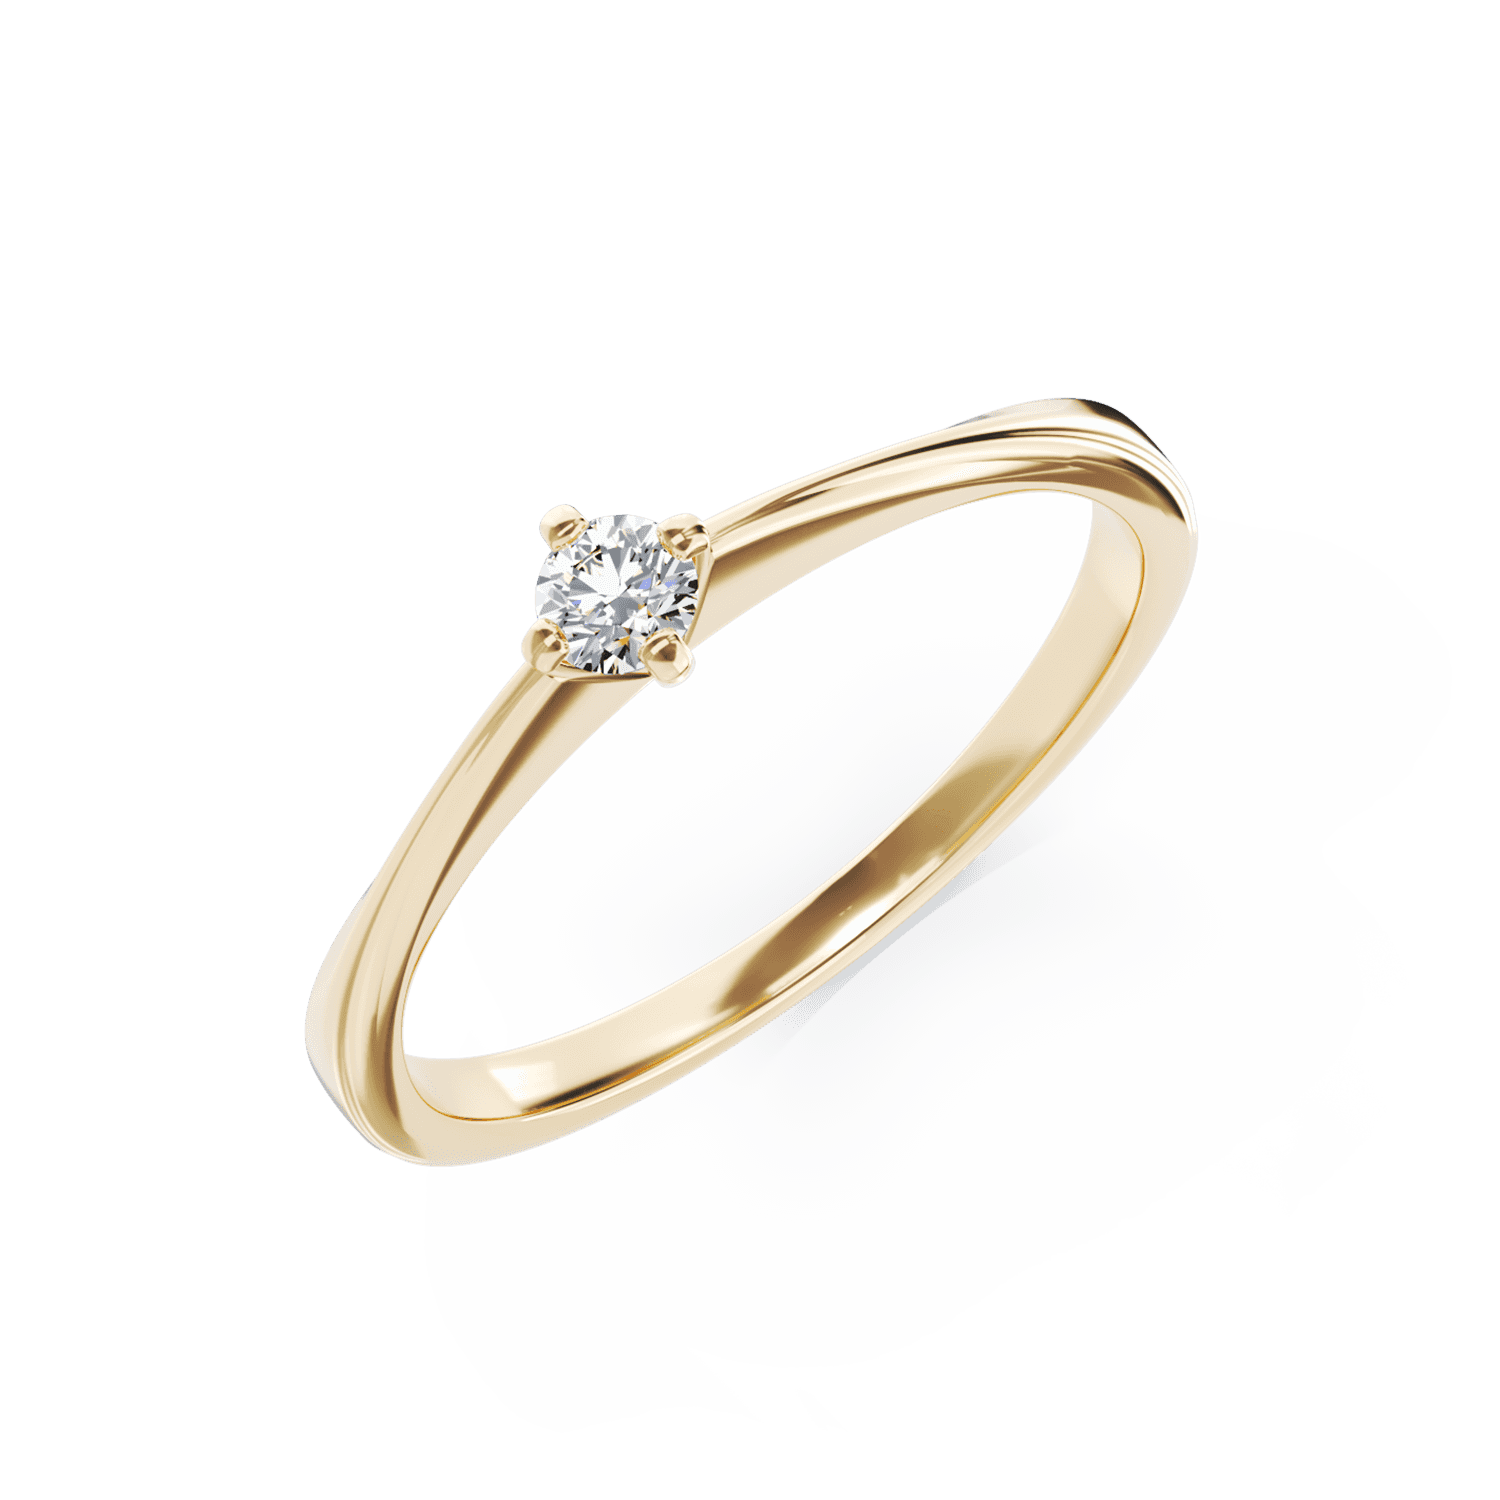 Inel de logodna din aur galben de 18K cu un diamant solitaire de 0.11ct